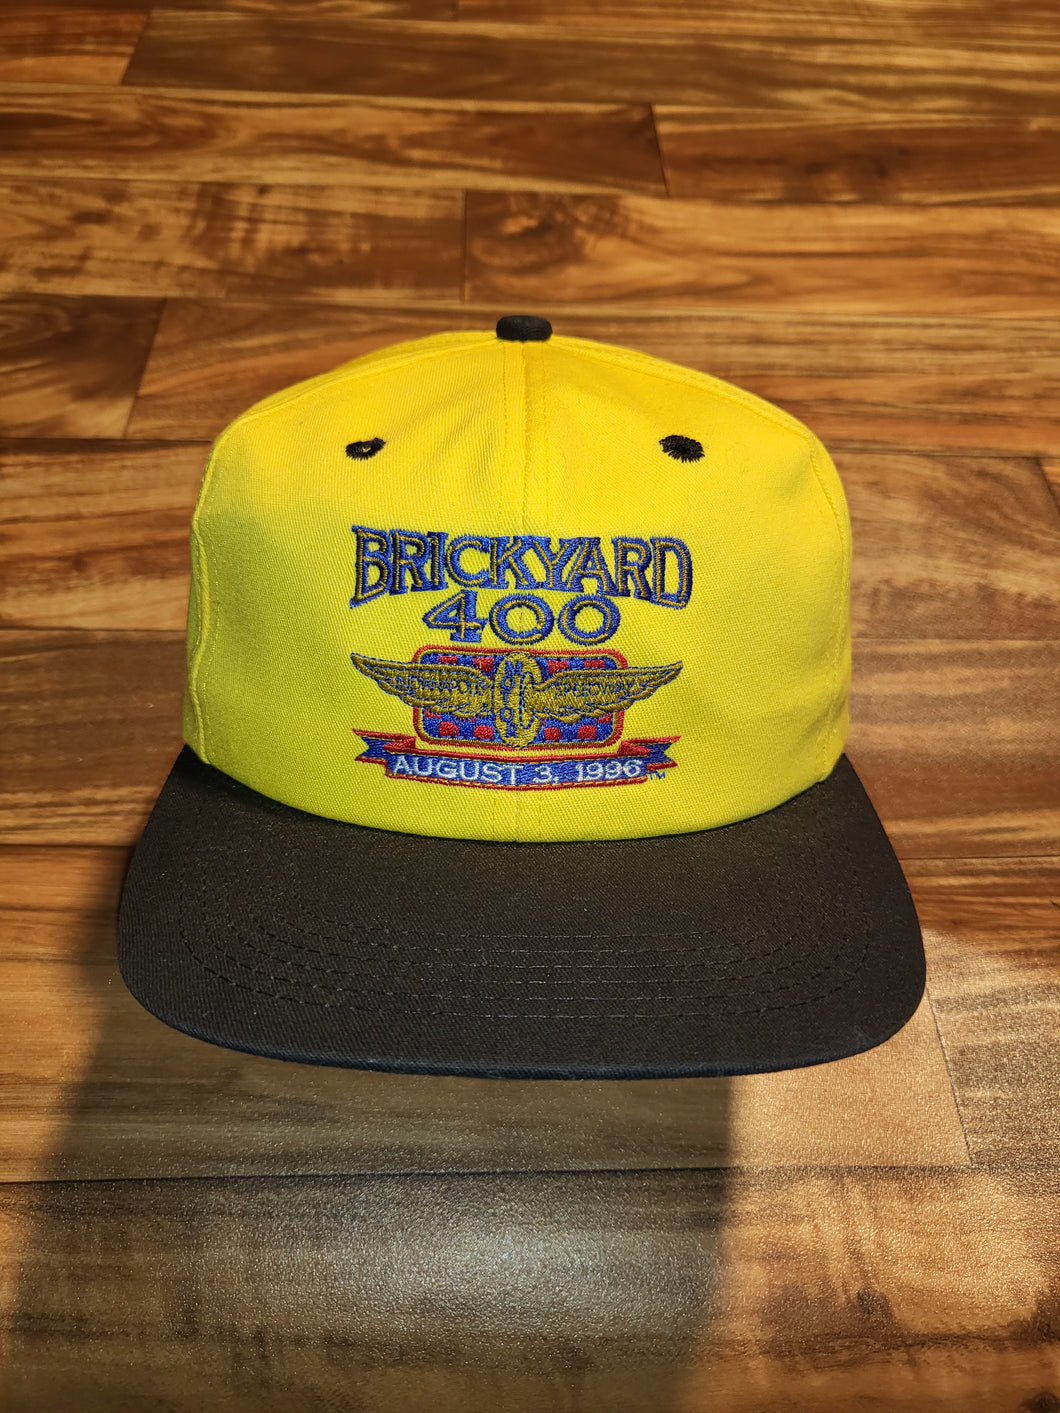 Vintage Brickyard 400 Nascar Racing 1996 Hat